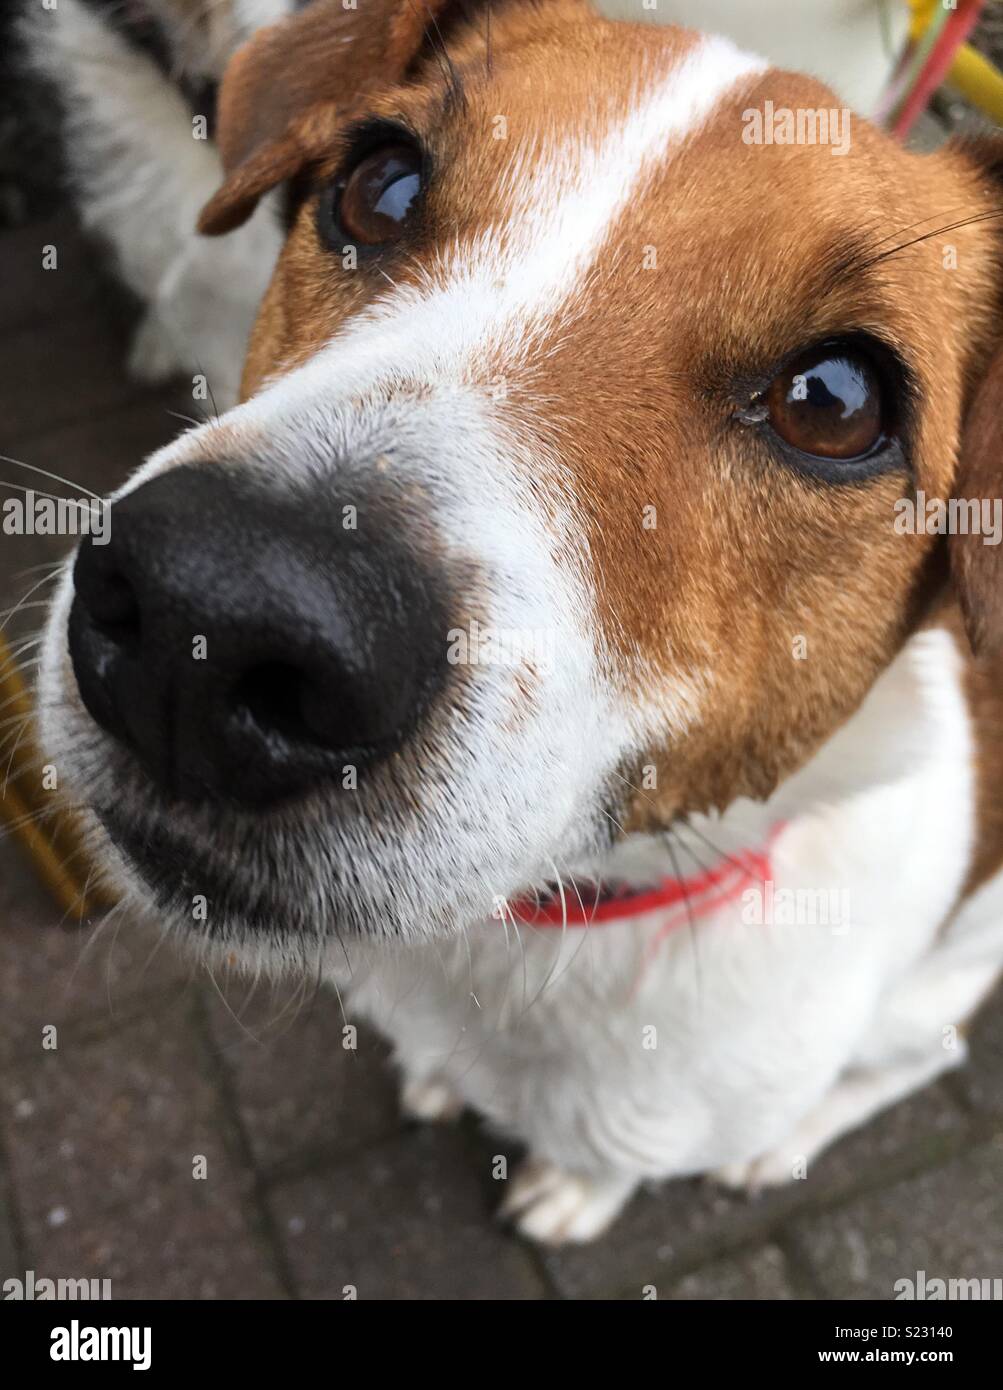 Close up doggy Stock Photo - Alamy